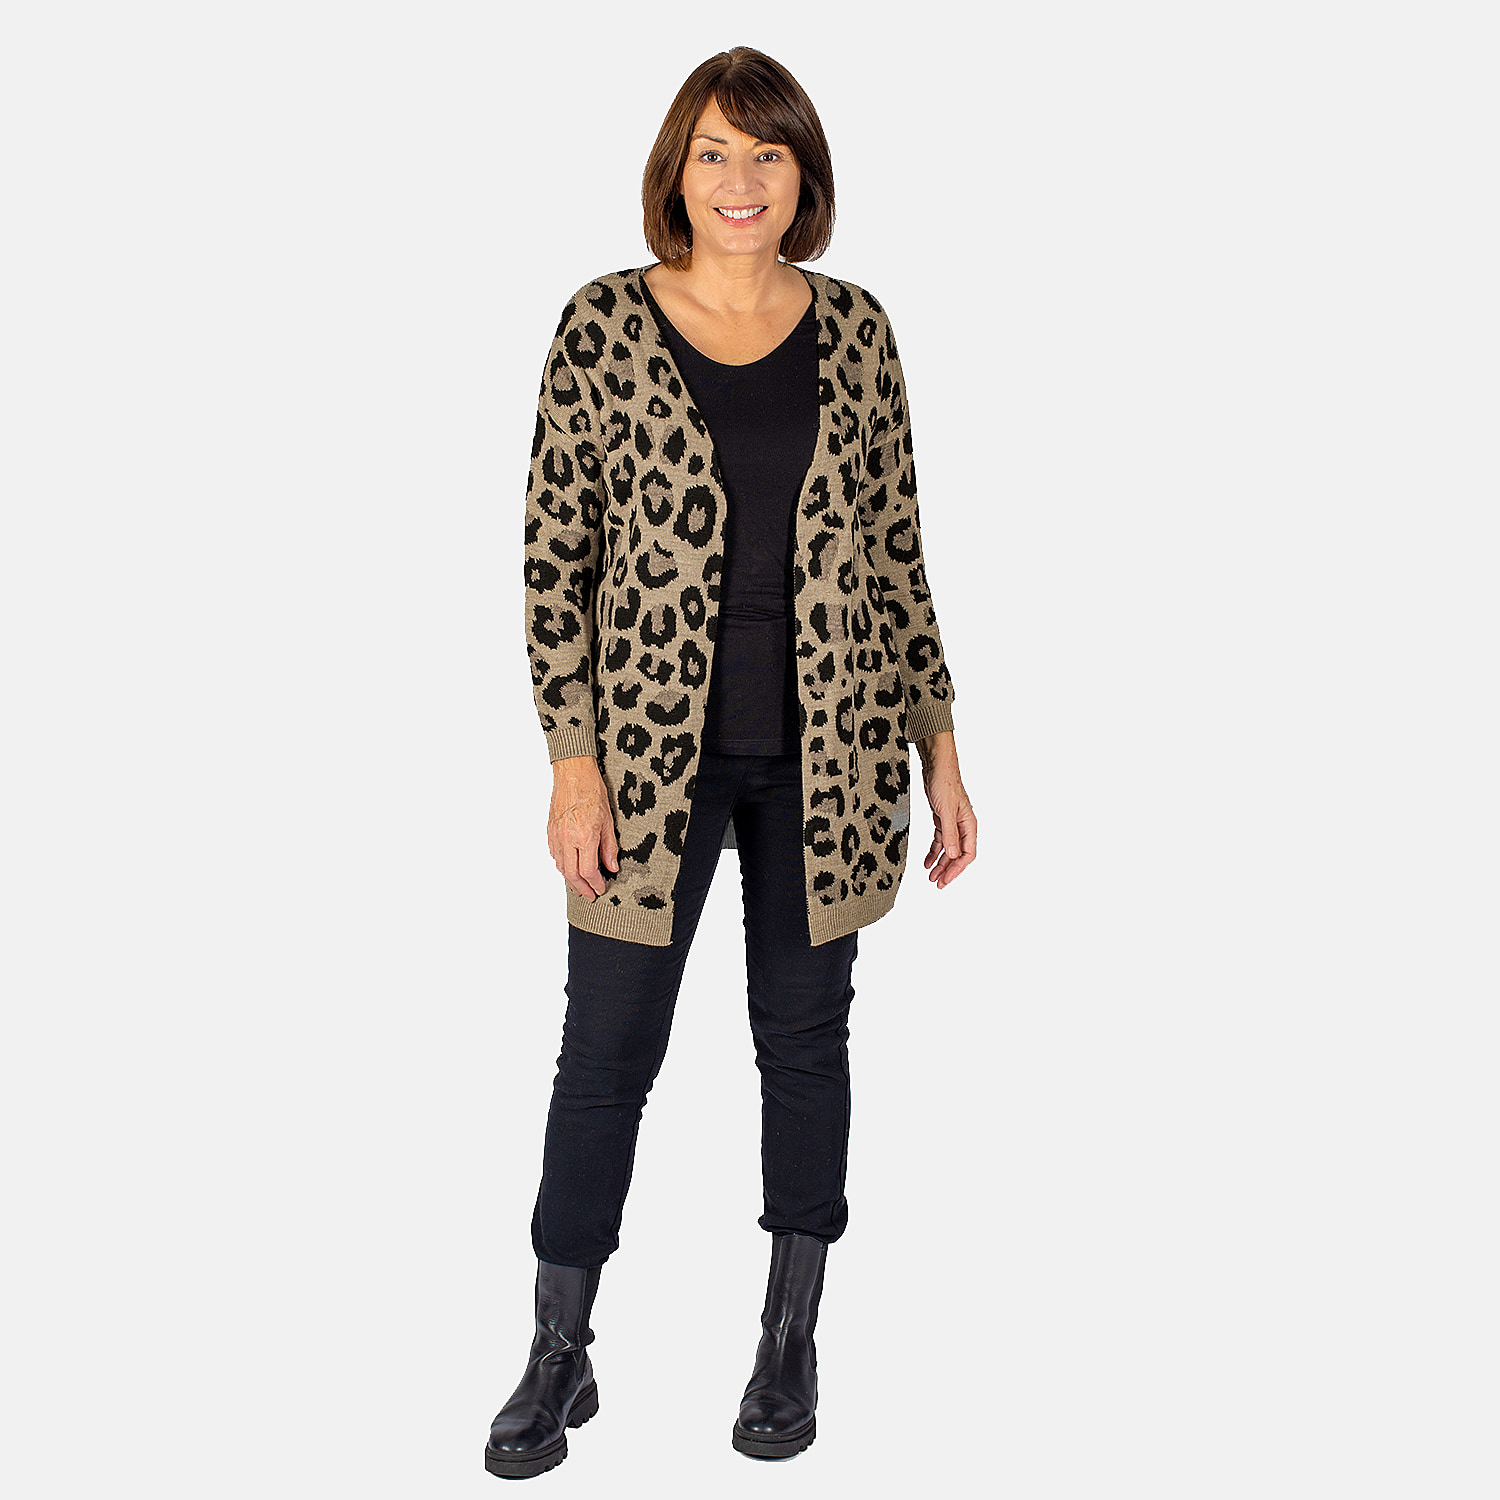 TAMSY Leopard Knit Cardigan